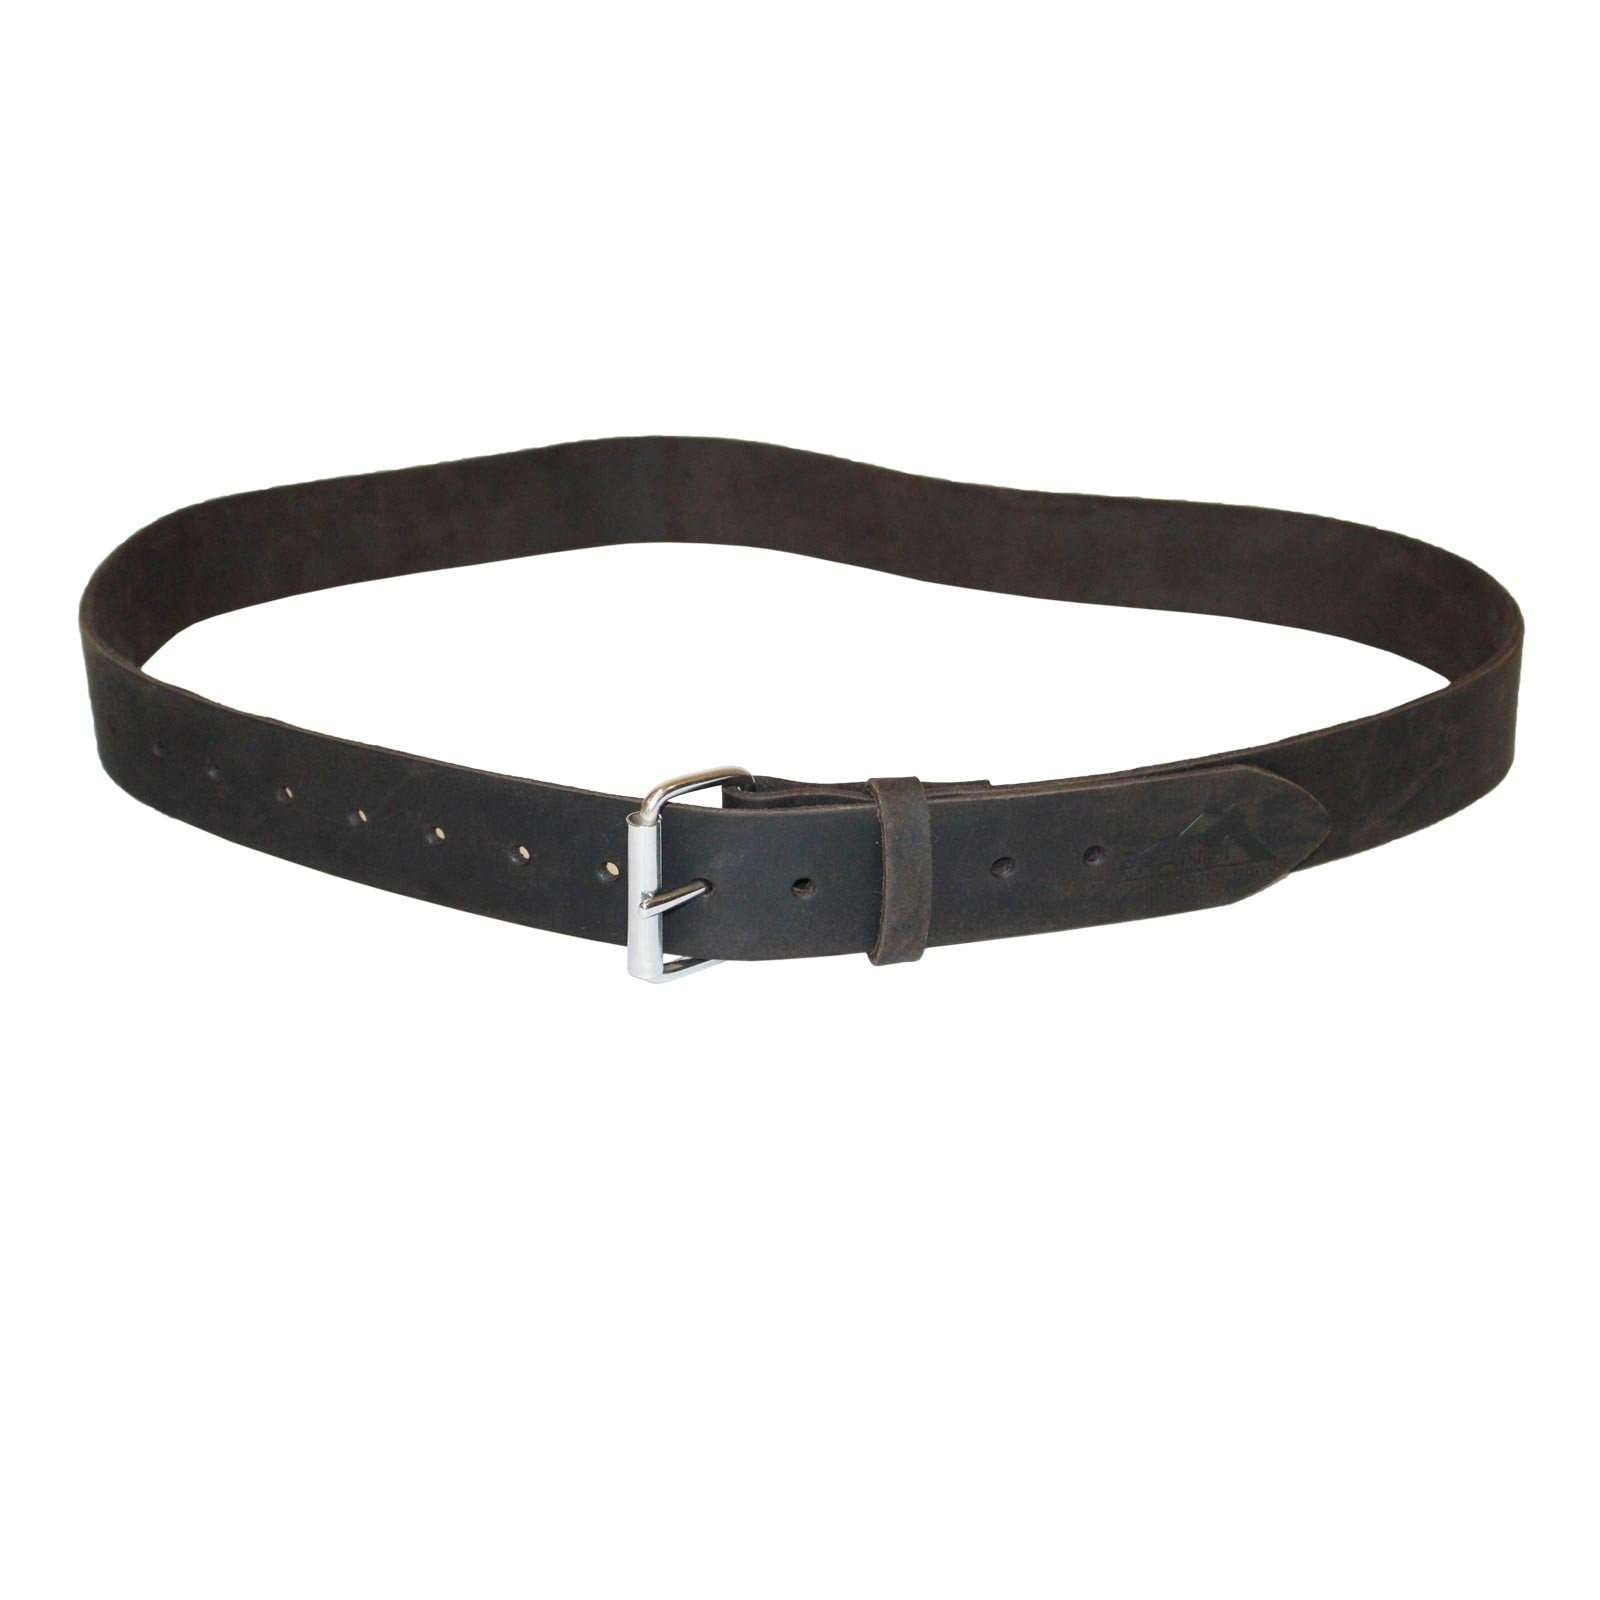 Prandi, Prandi Genuine Leather Belt, Belts, Wylies Outdoor World,